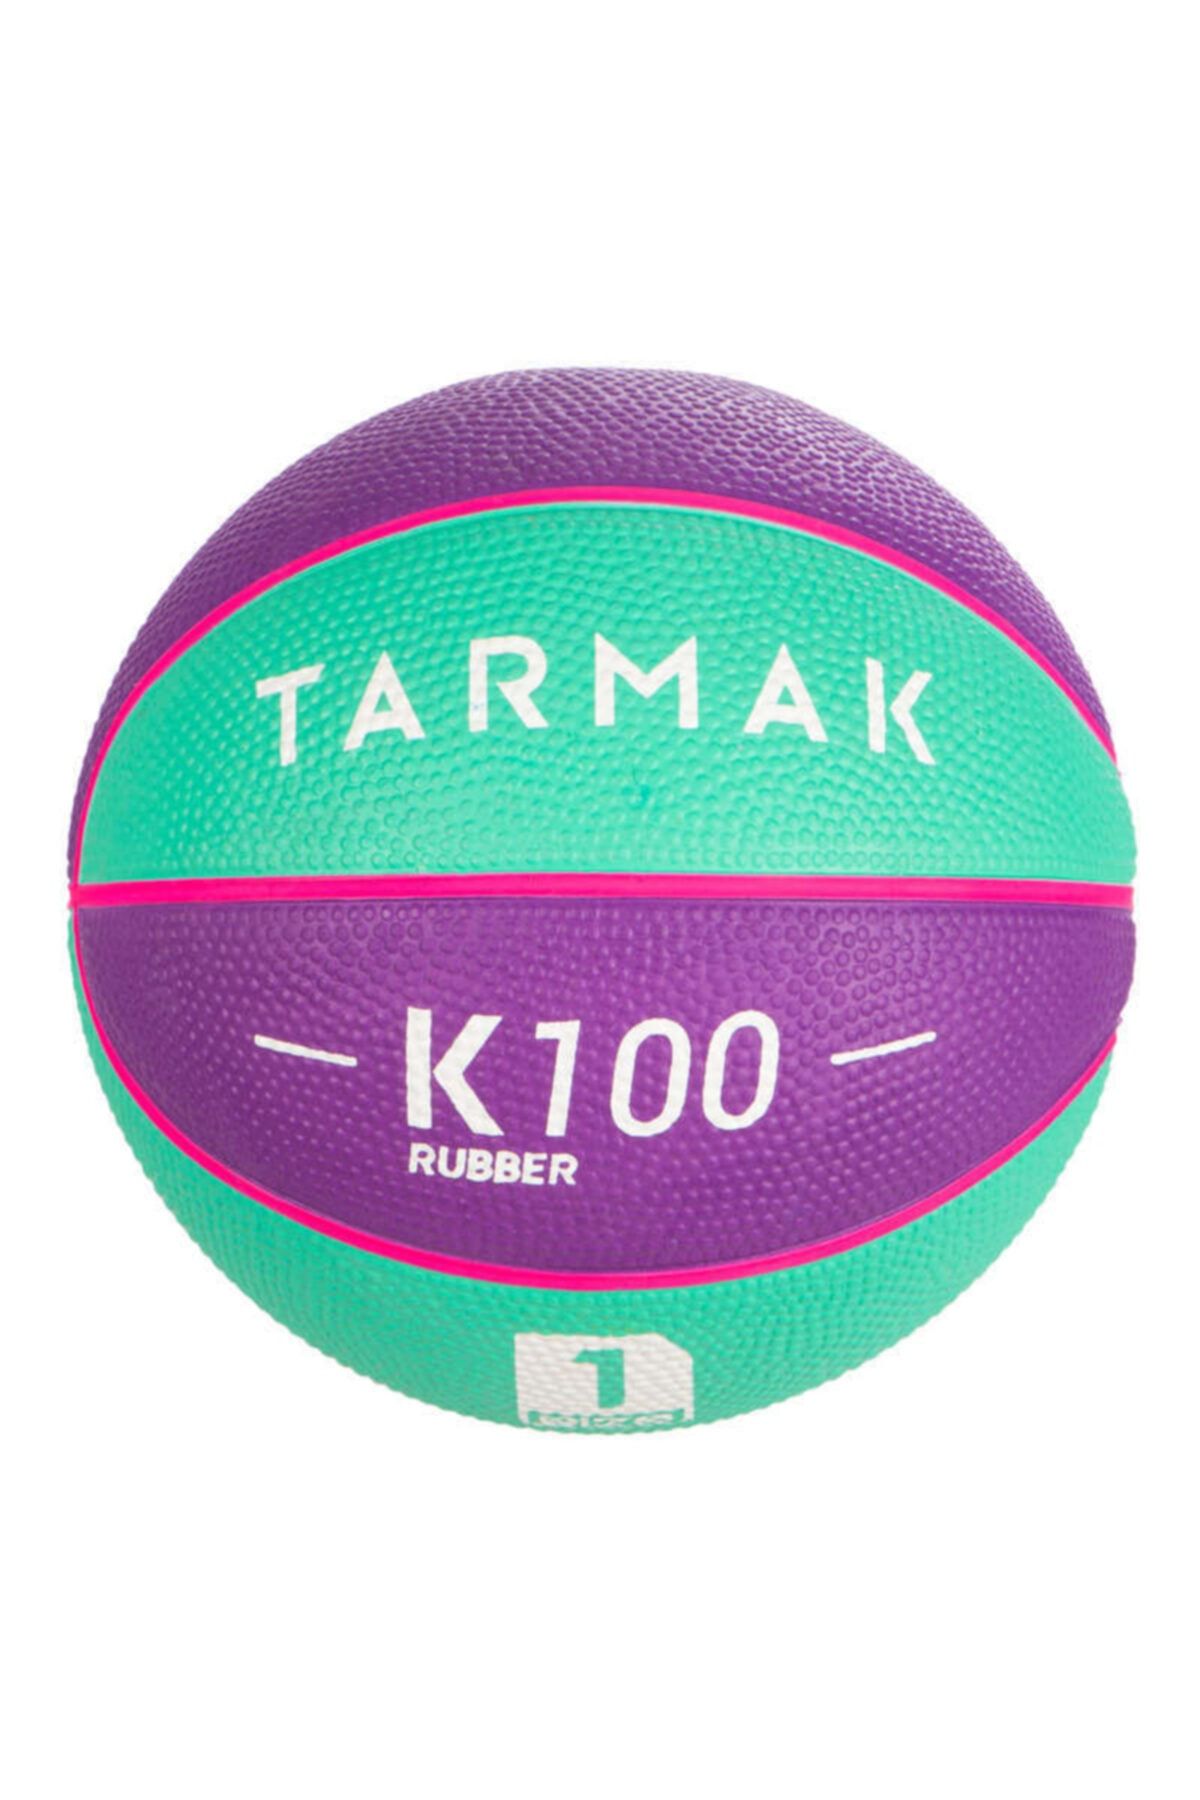 DOGASTR Mini Basketbol Topu Mor Turkuaz K100 Tarmak